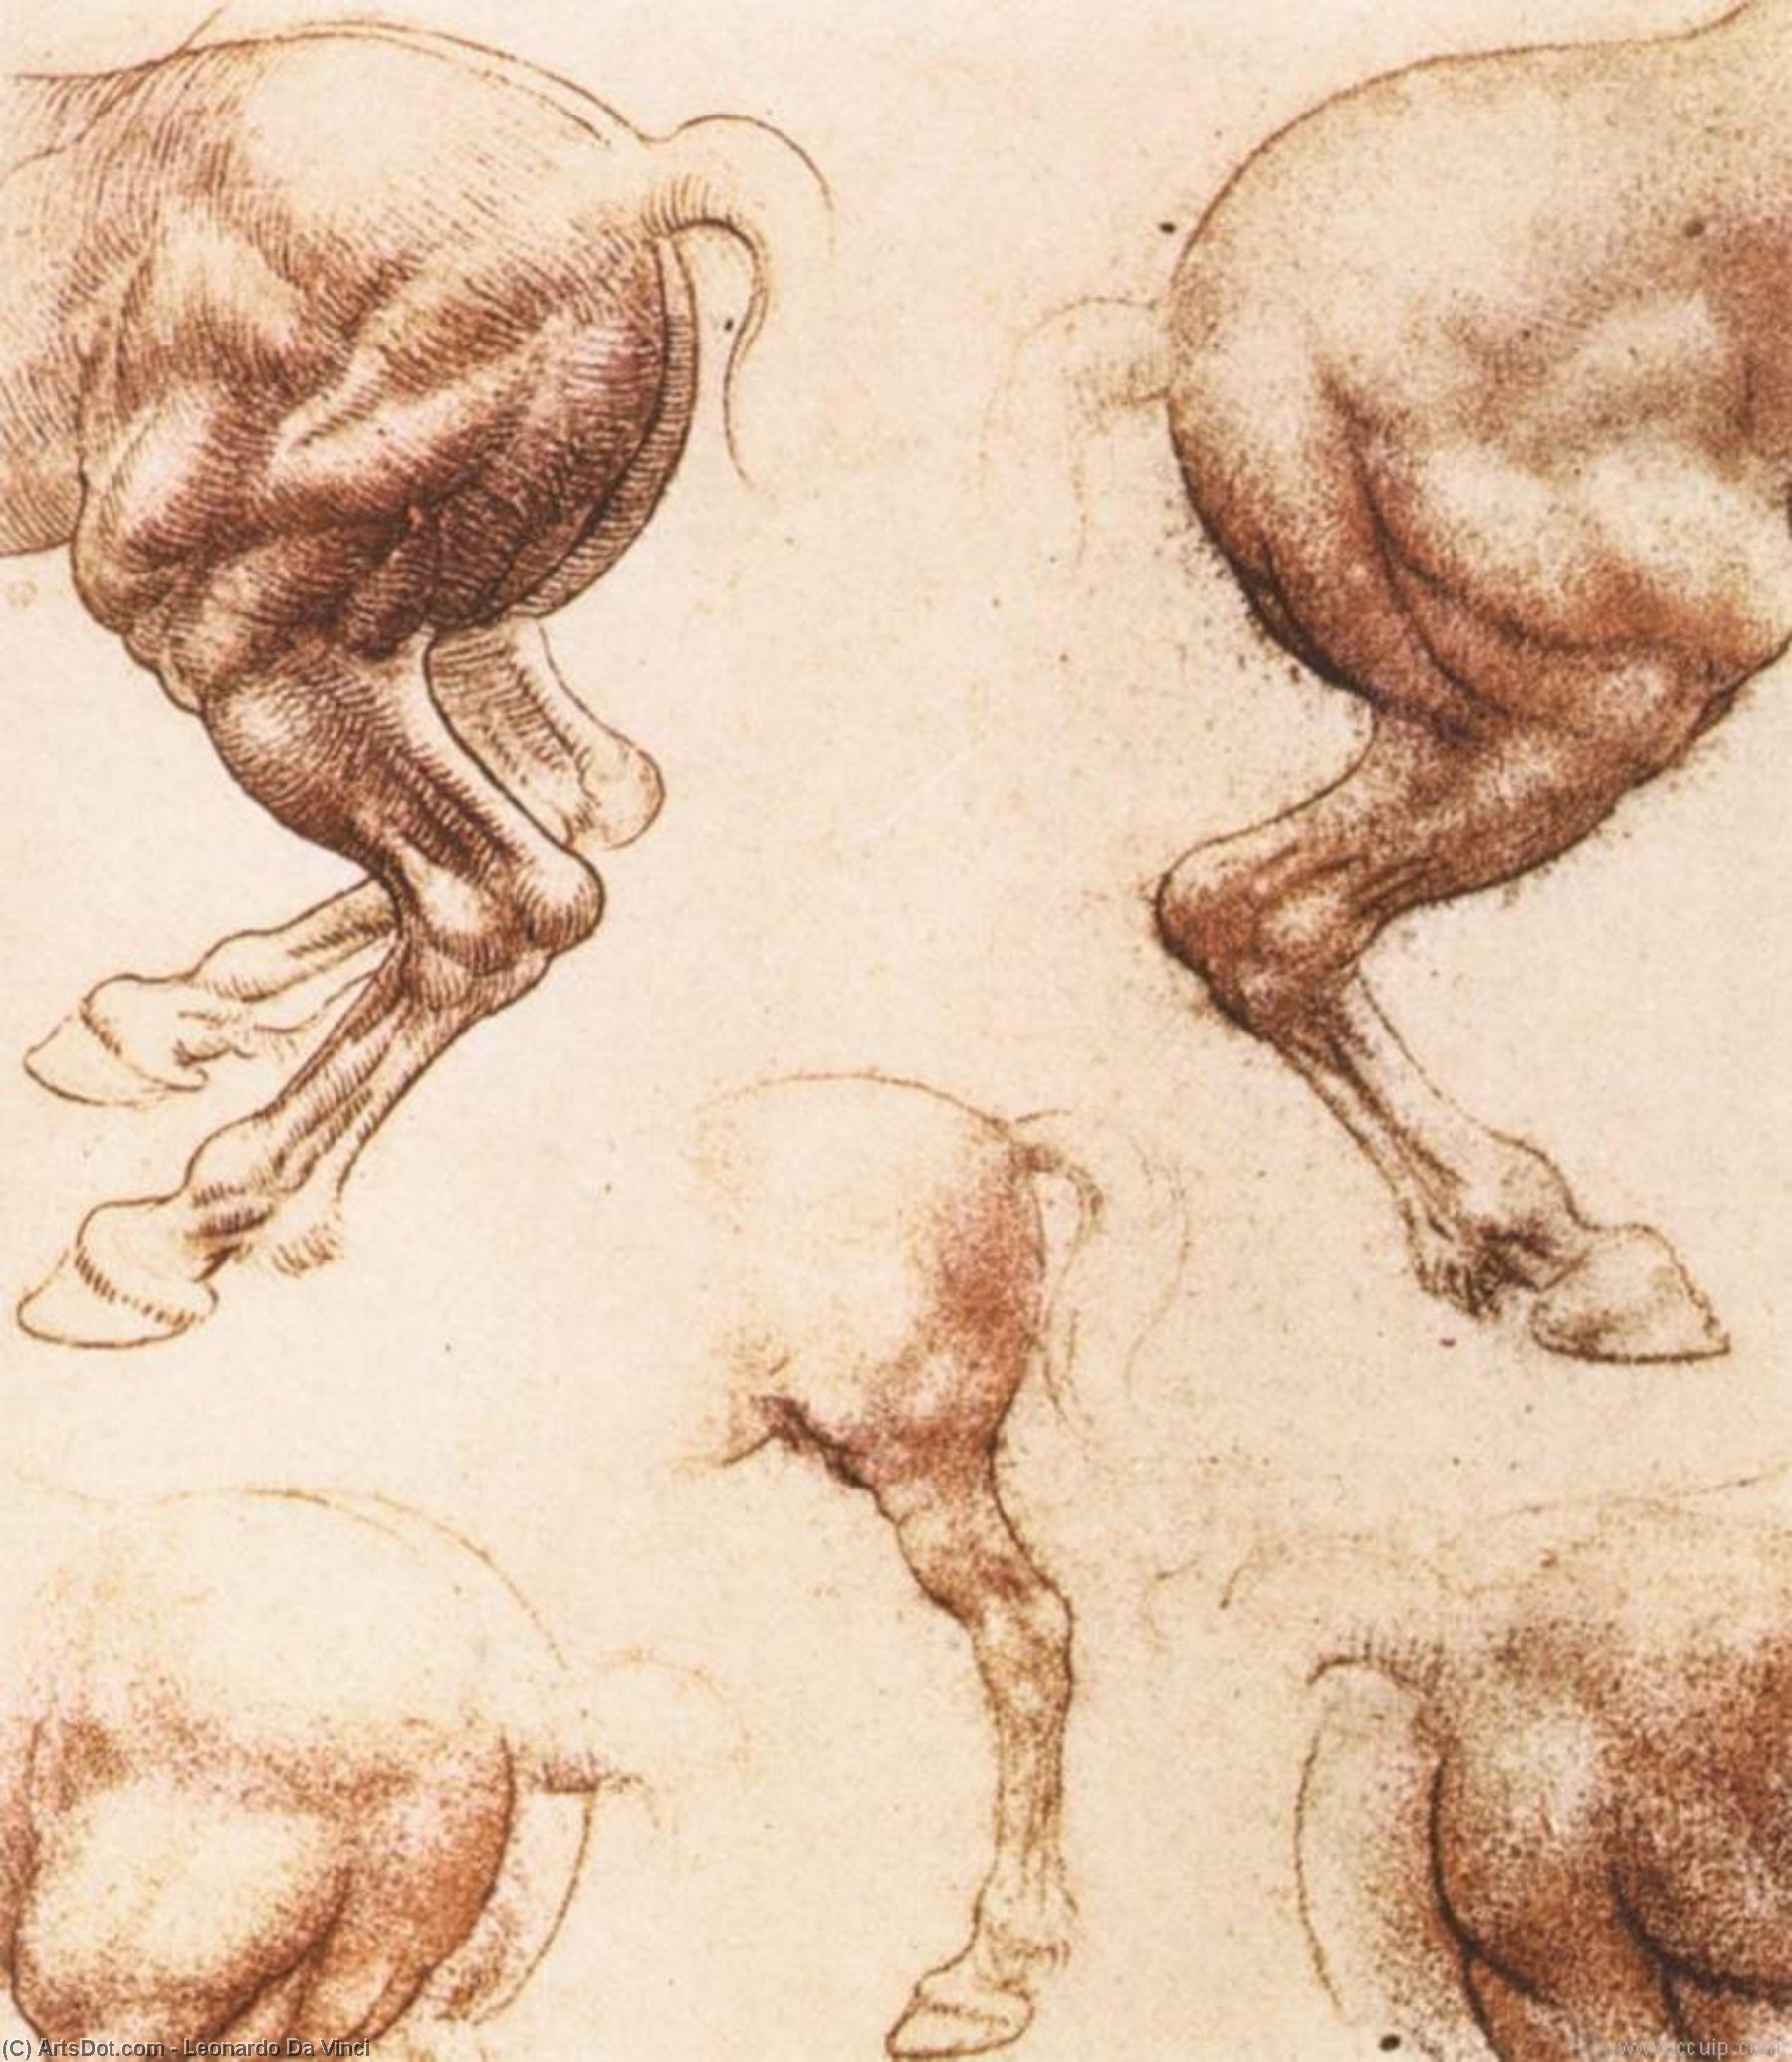 Леонардо да Винчи зарисовки лошадей